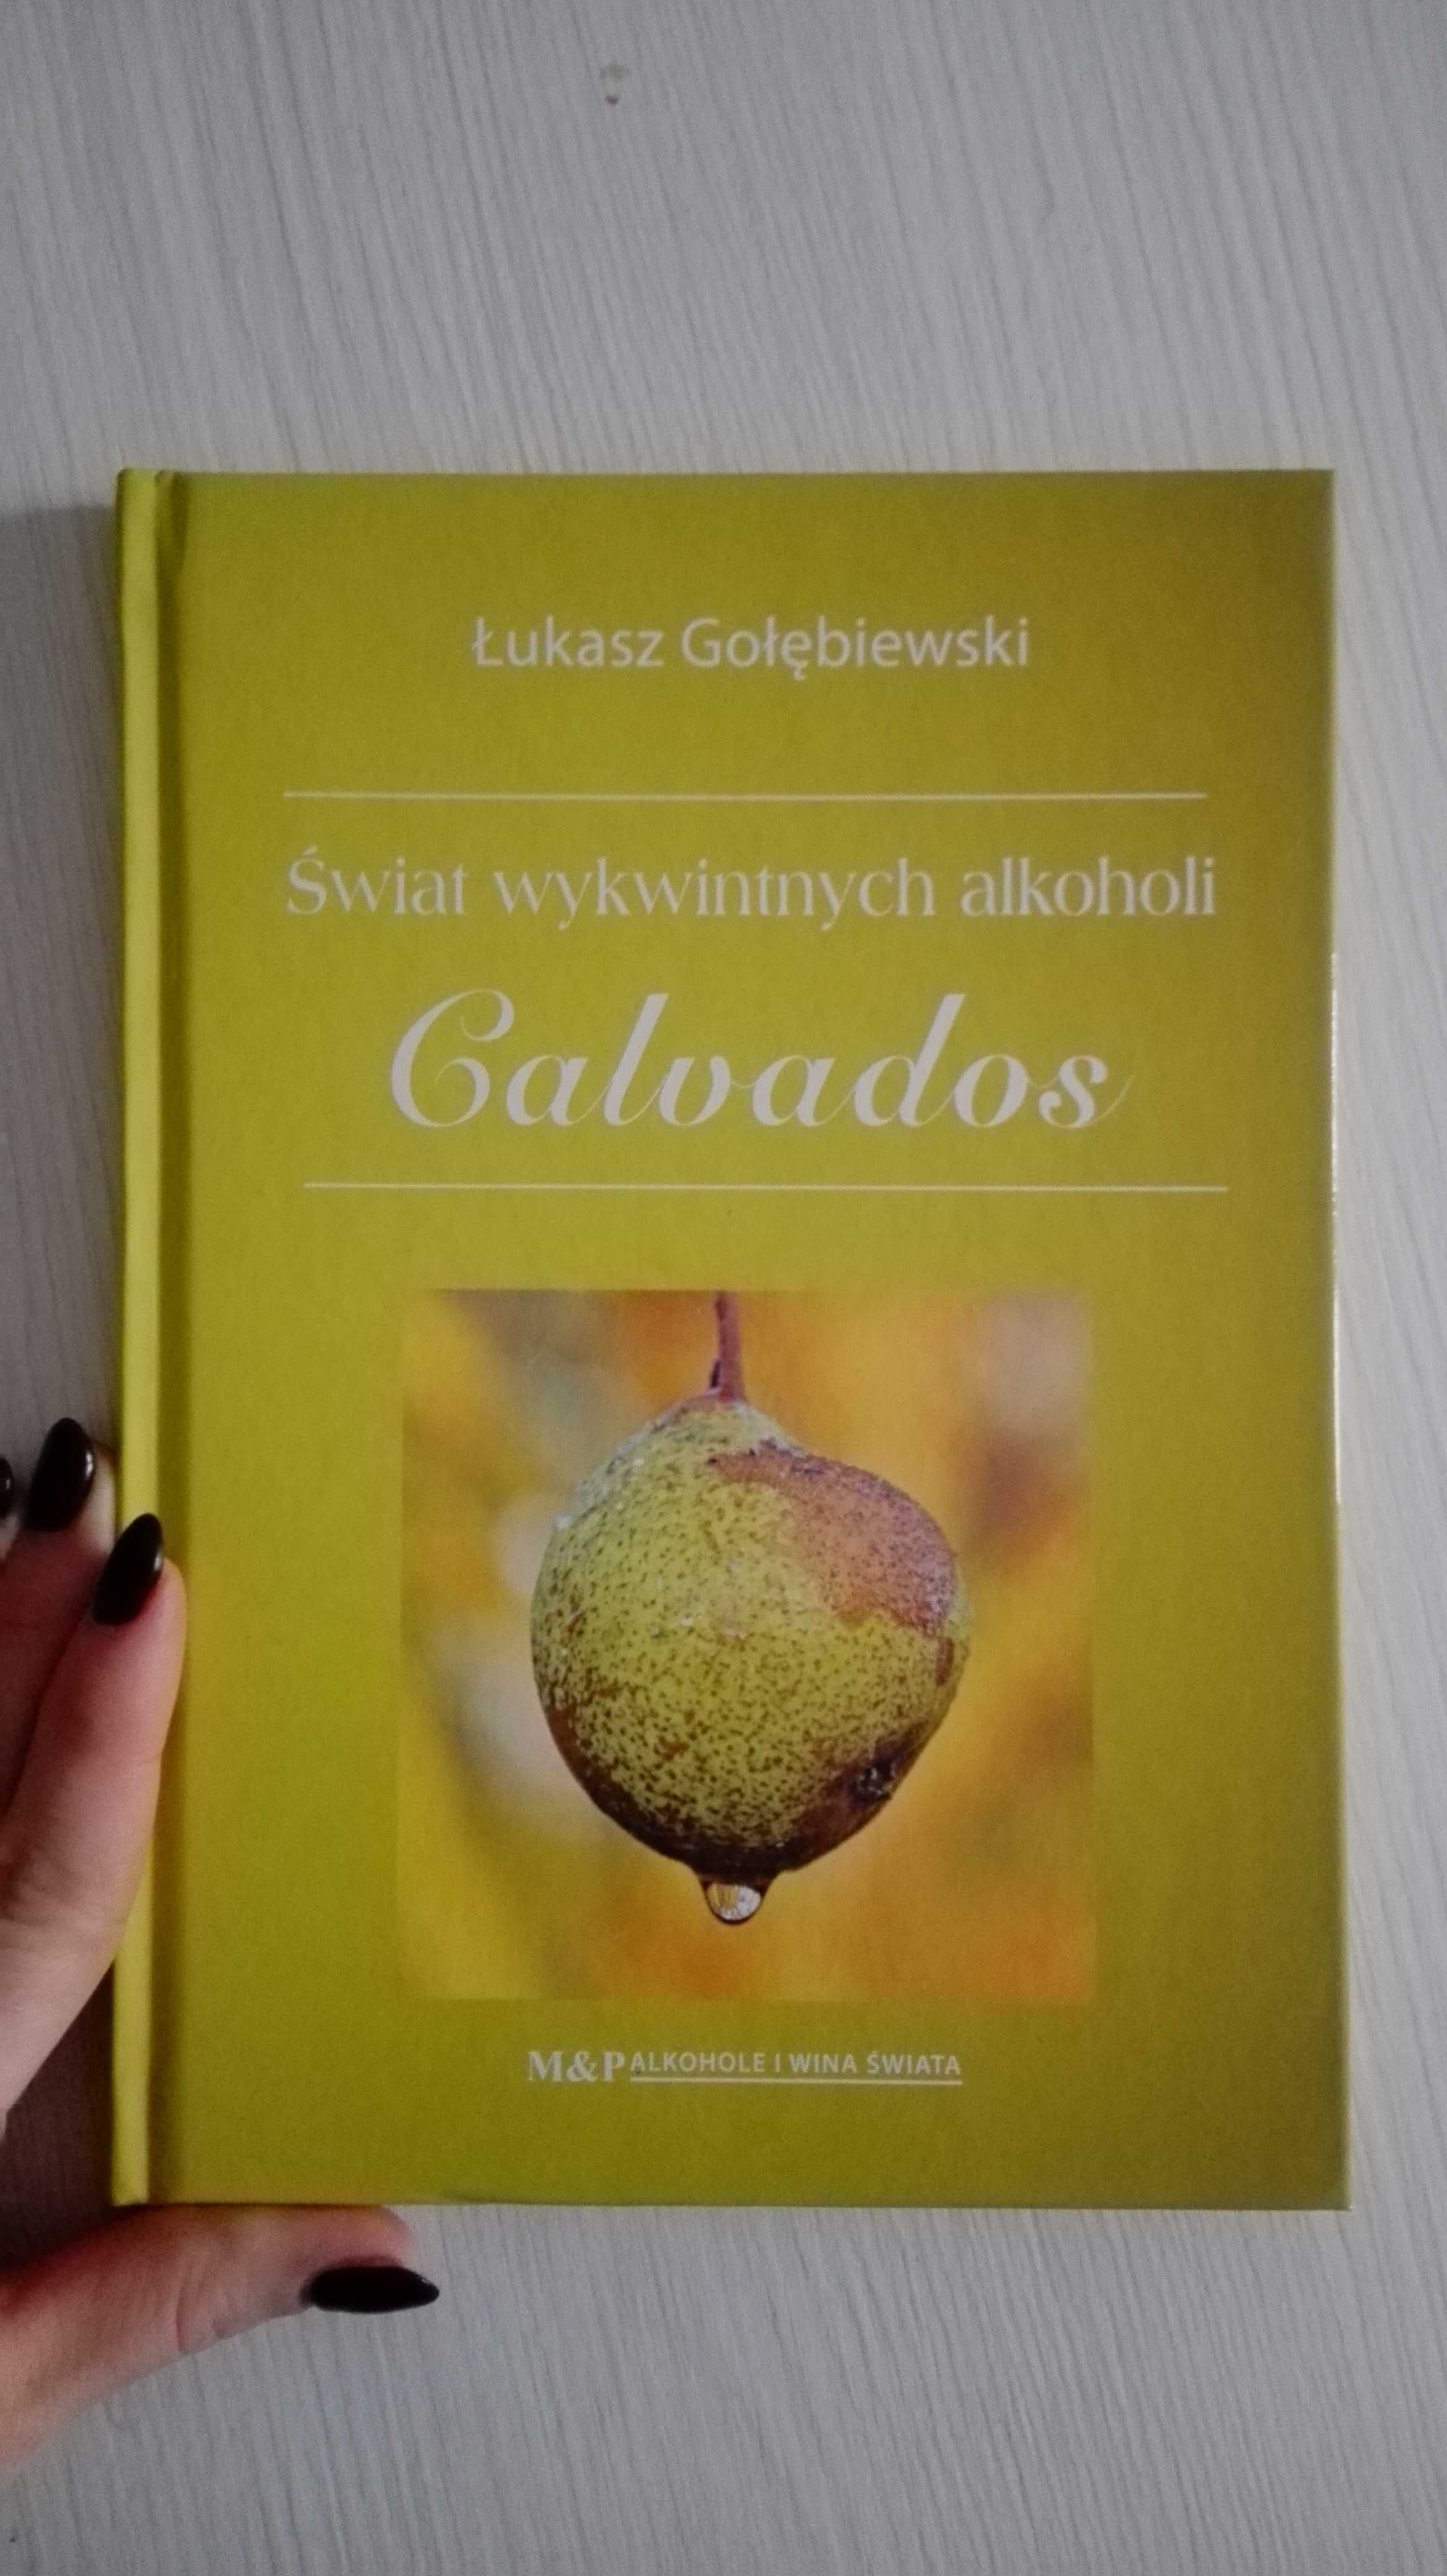 Łukasz Gołębiewski "Calvados"